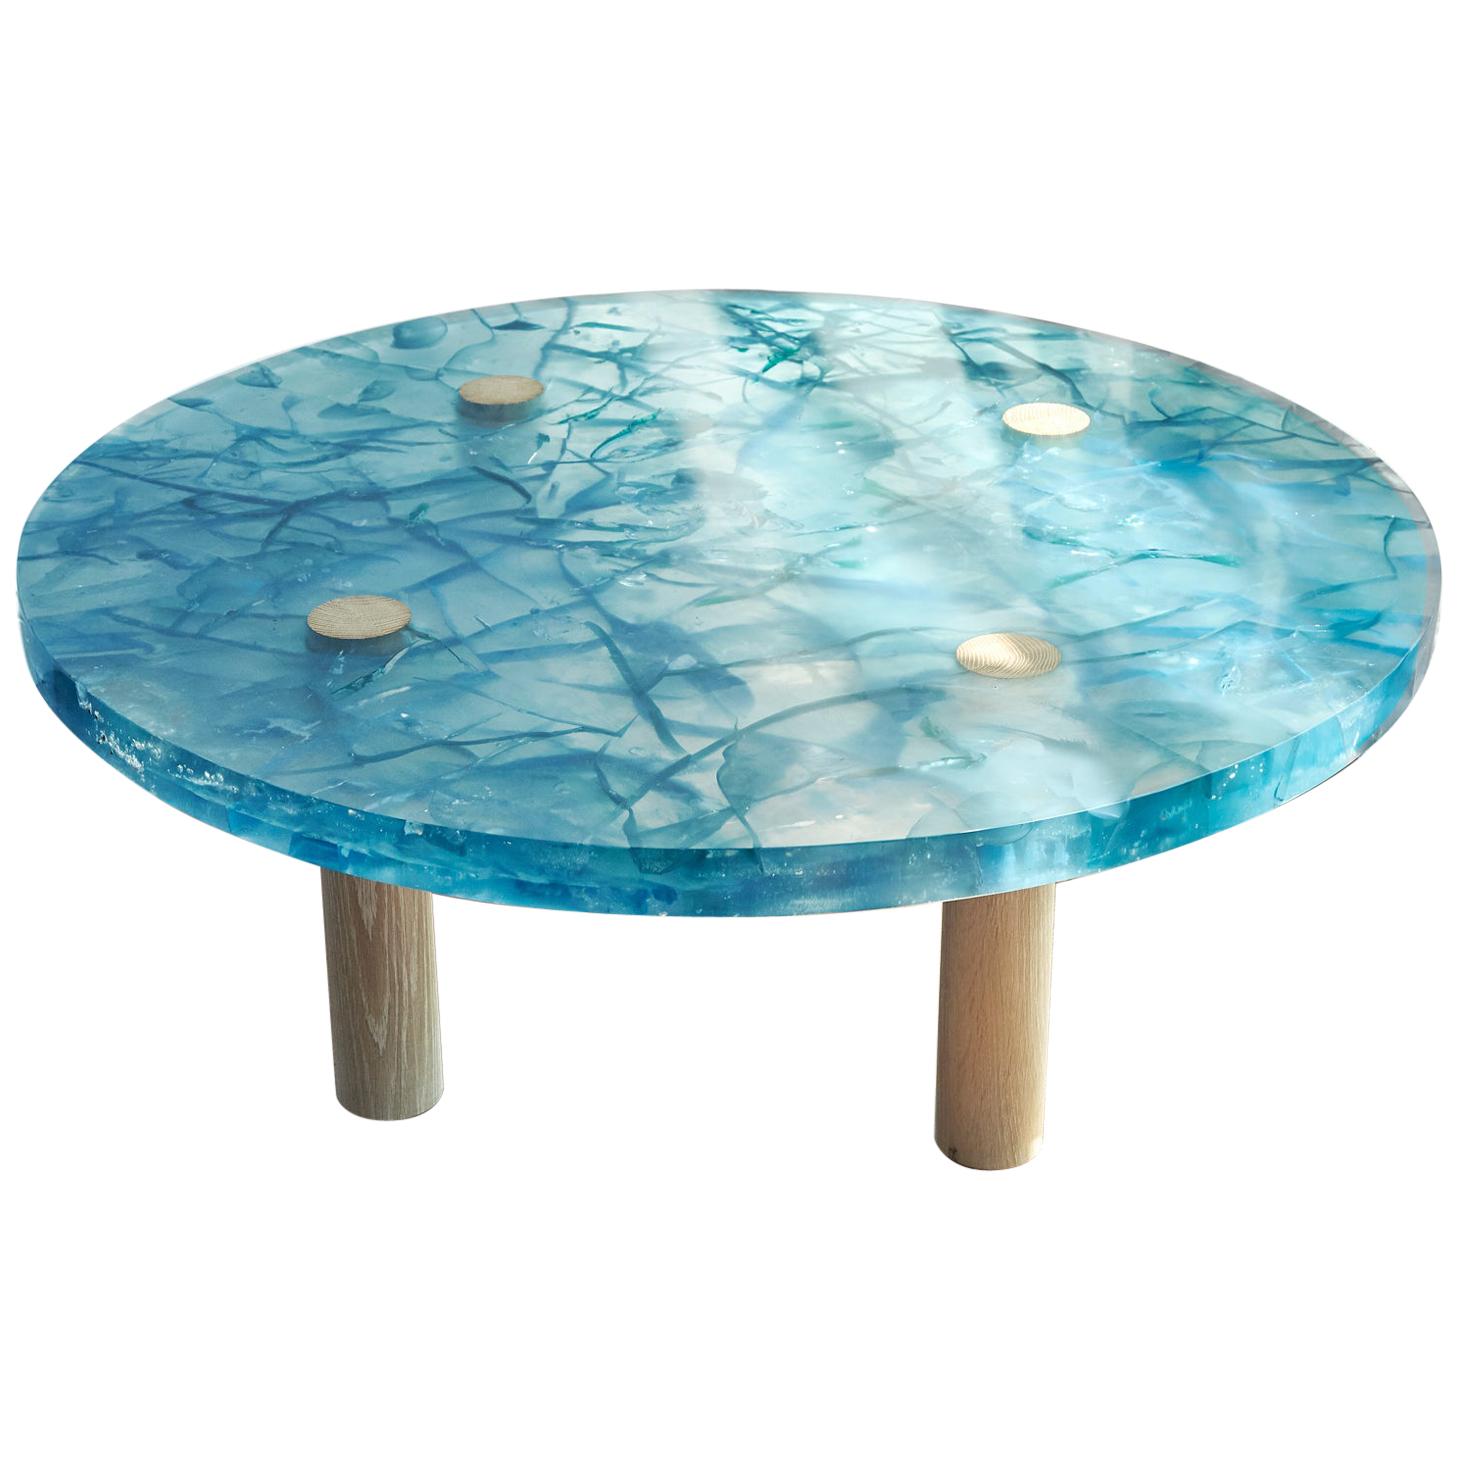 Handmade Blue Resin Coffee Table with Wood Legs